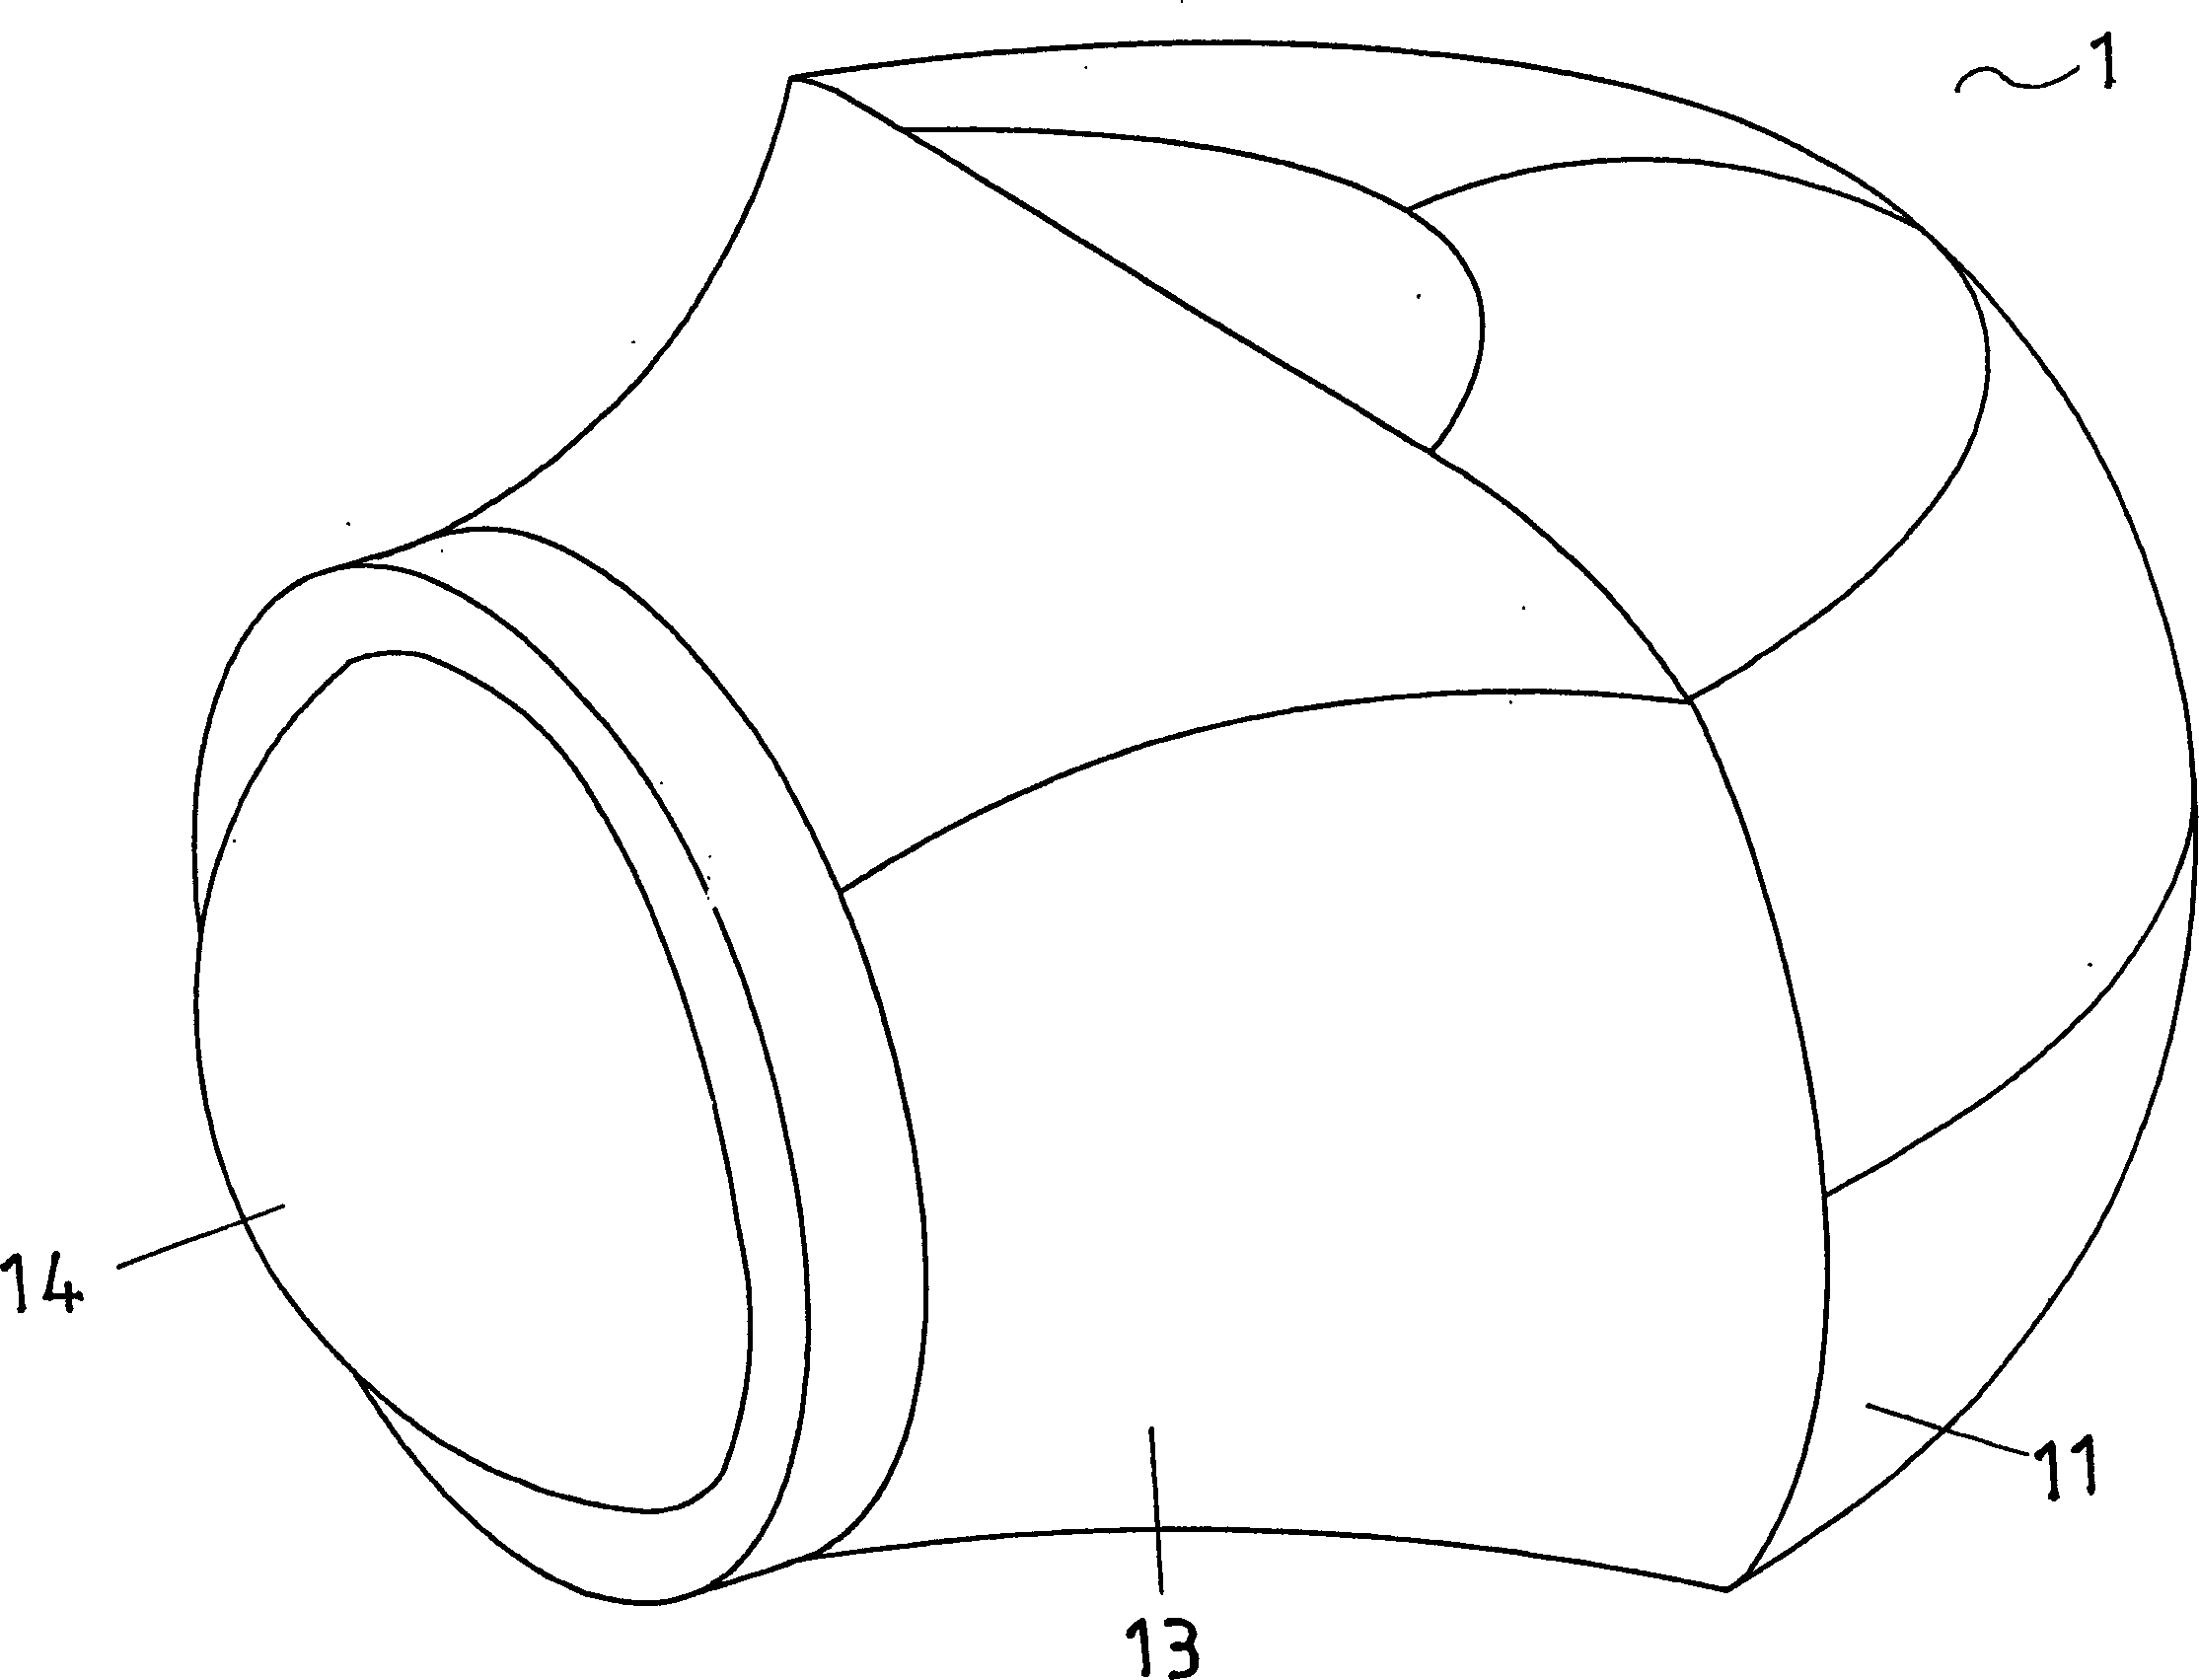 Light projection lens structure